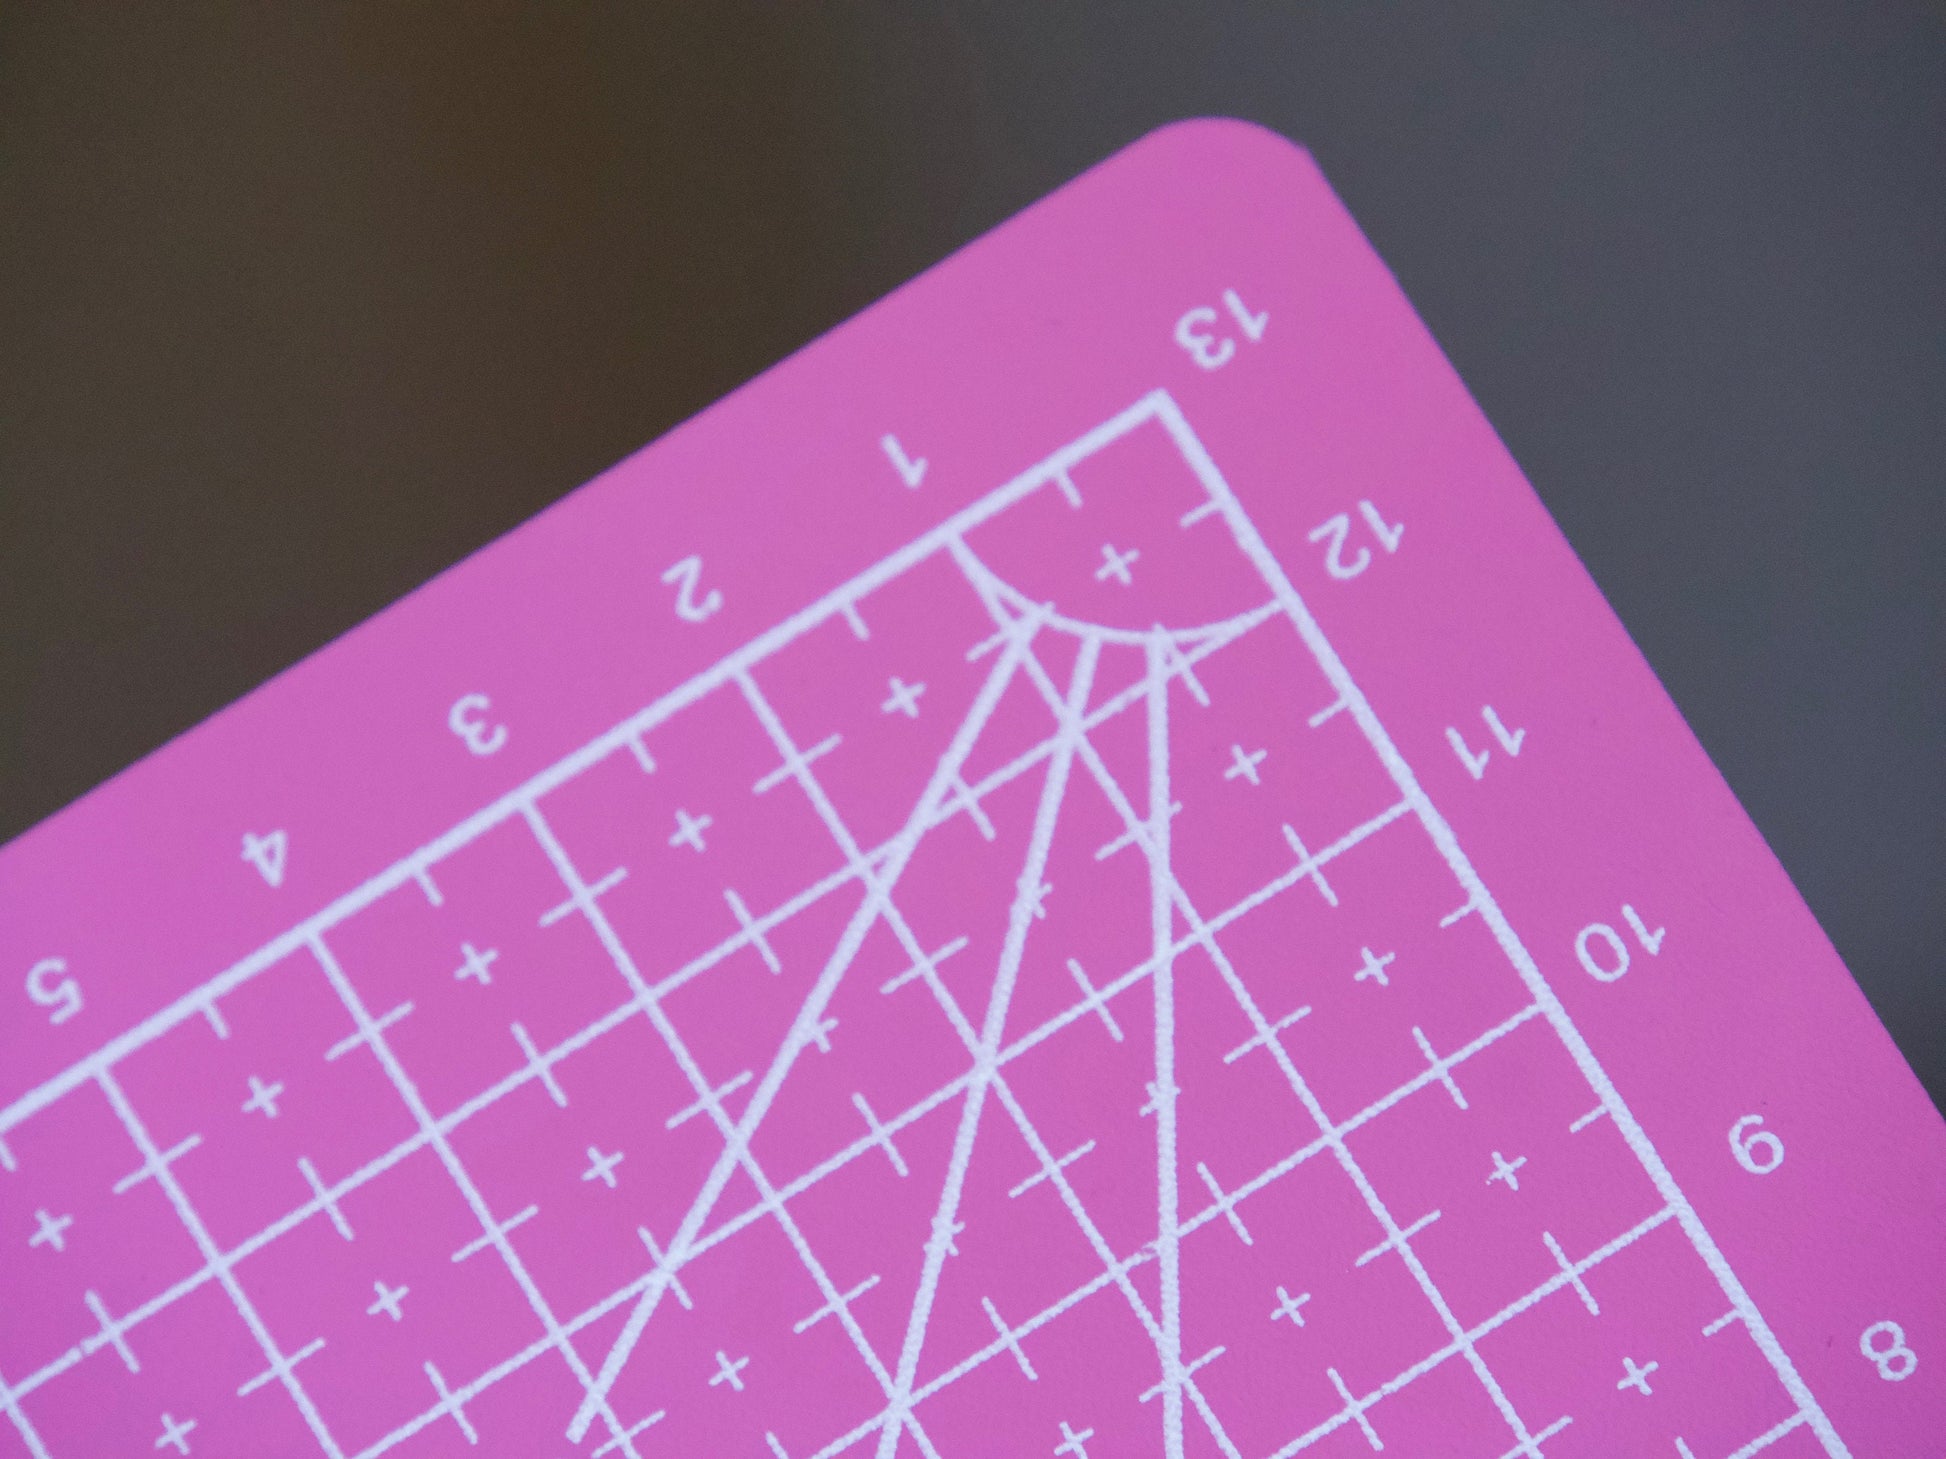 A5 20x13cm Pink Cutting Board